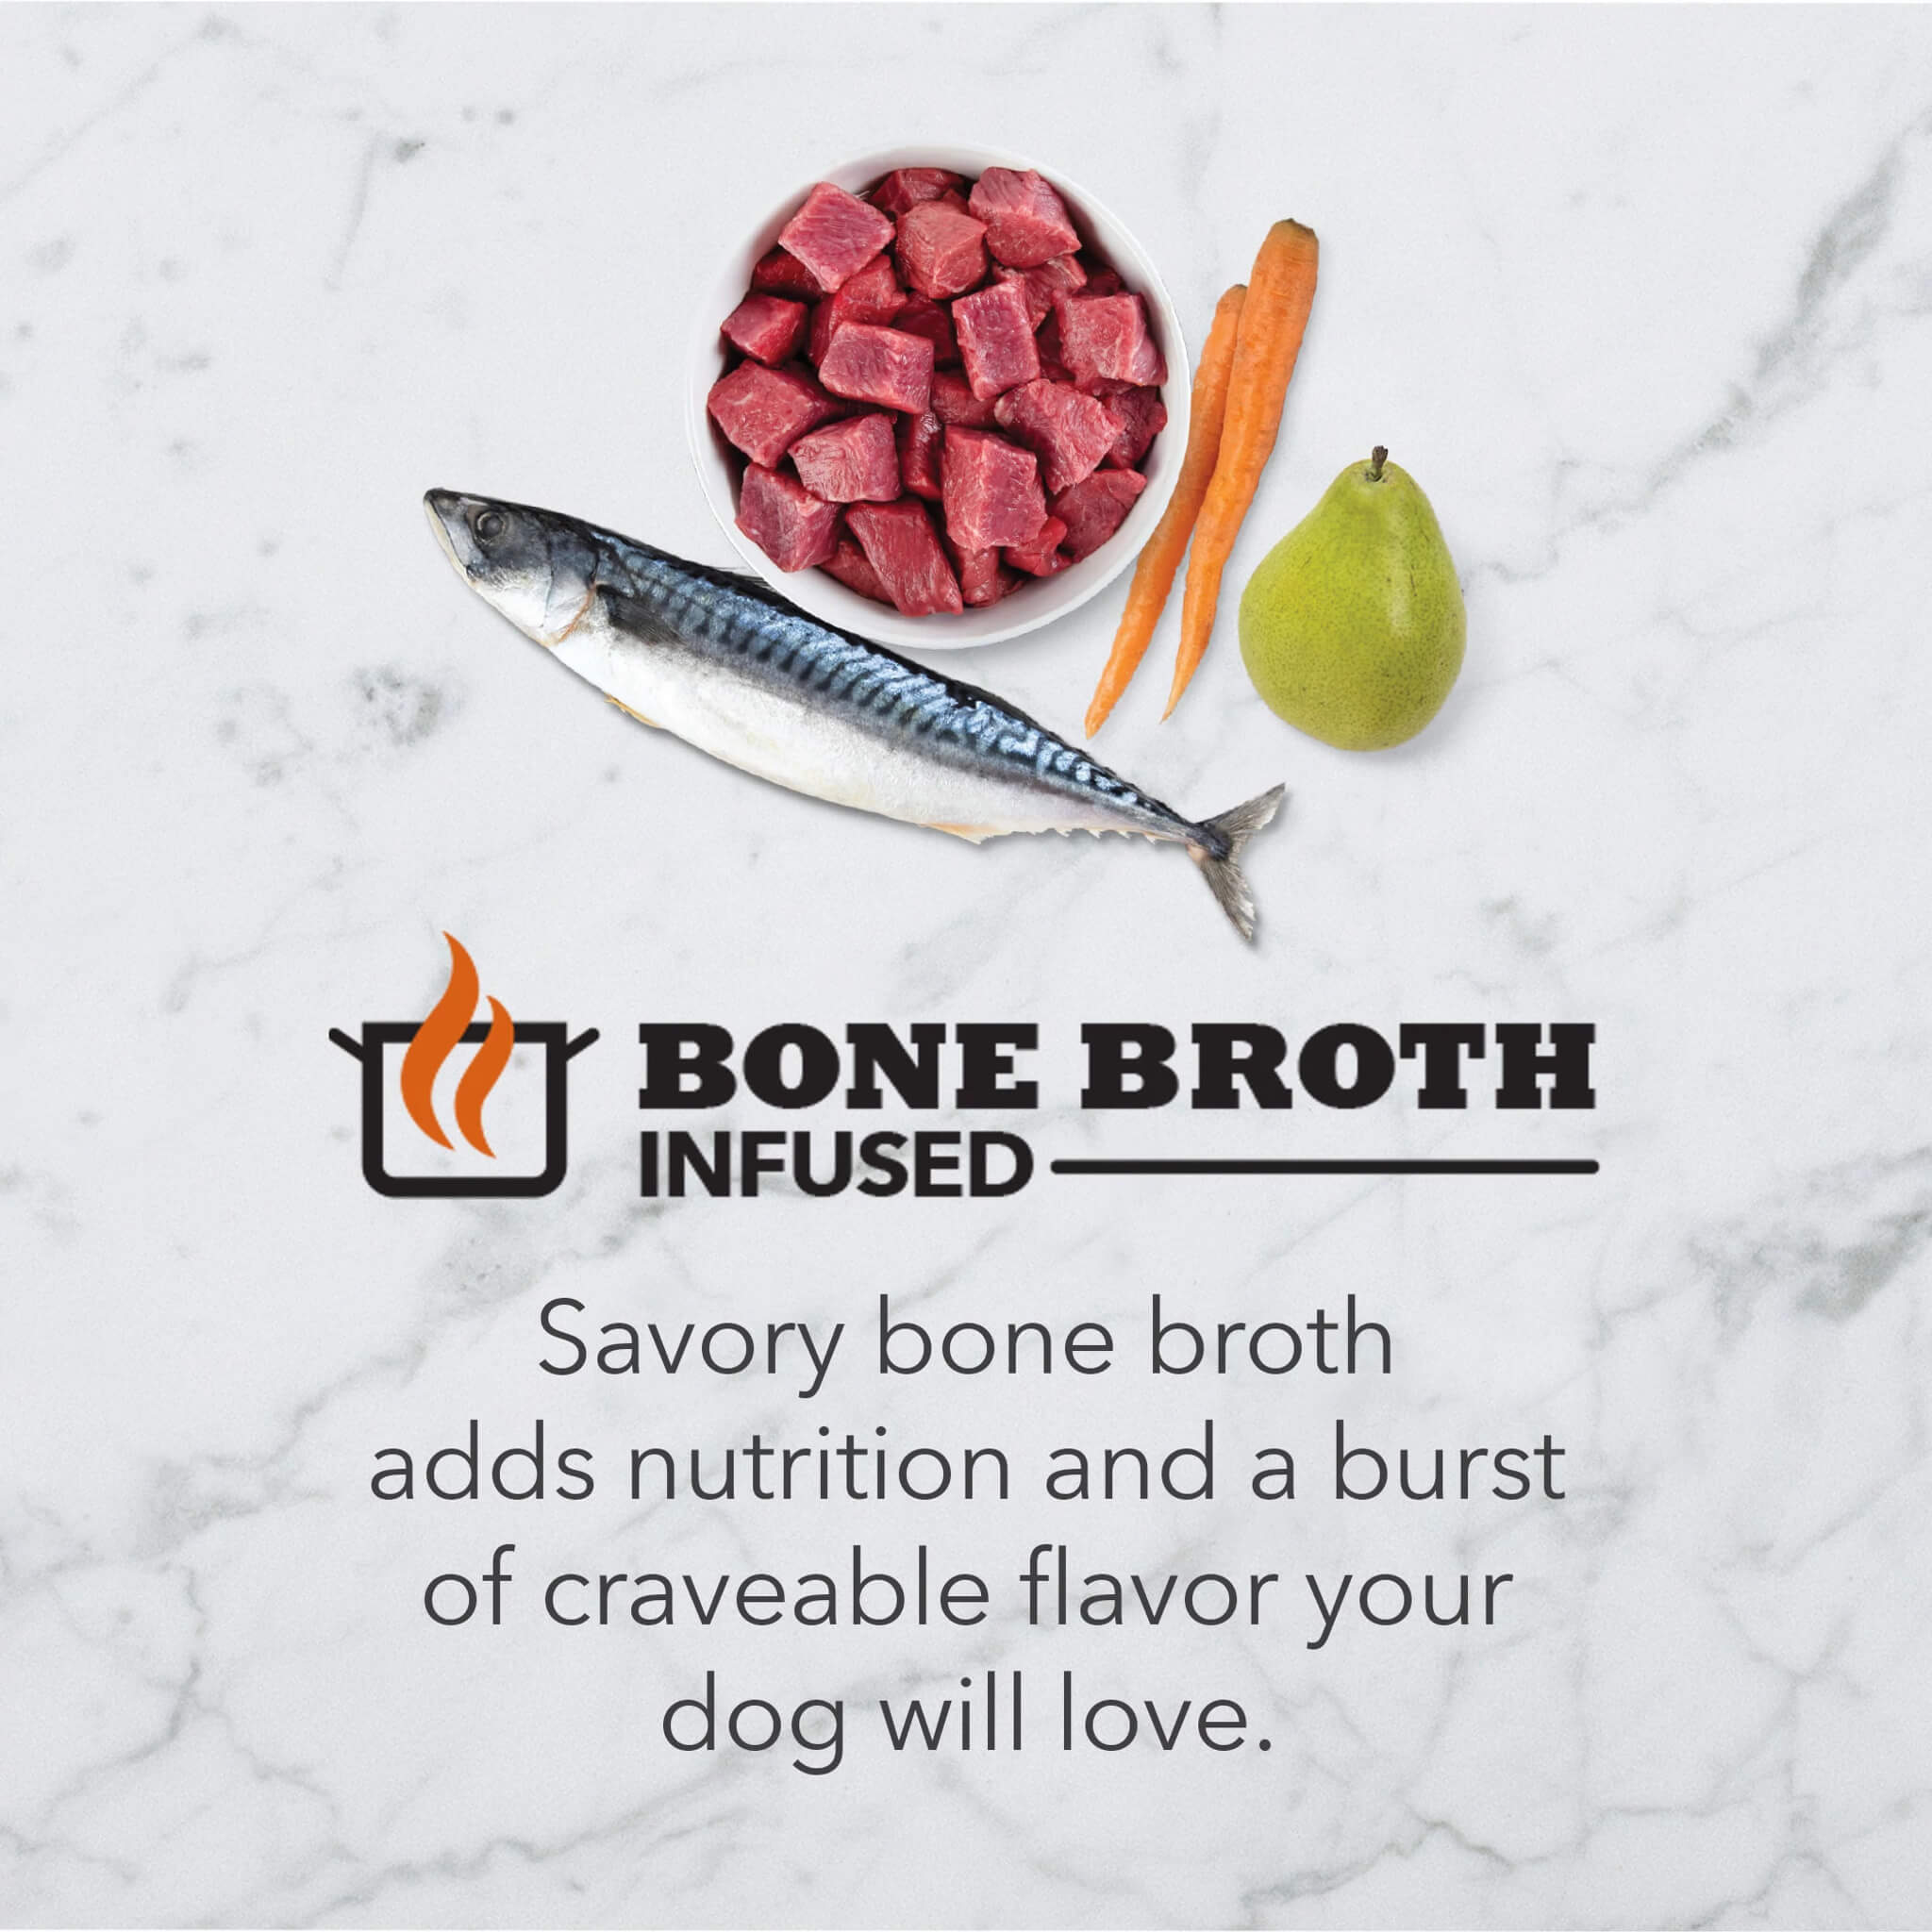 Bone broth infused